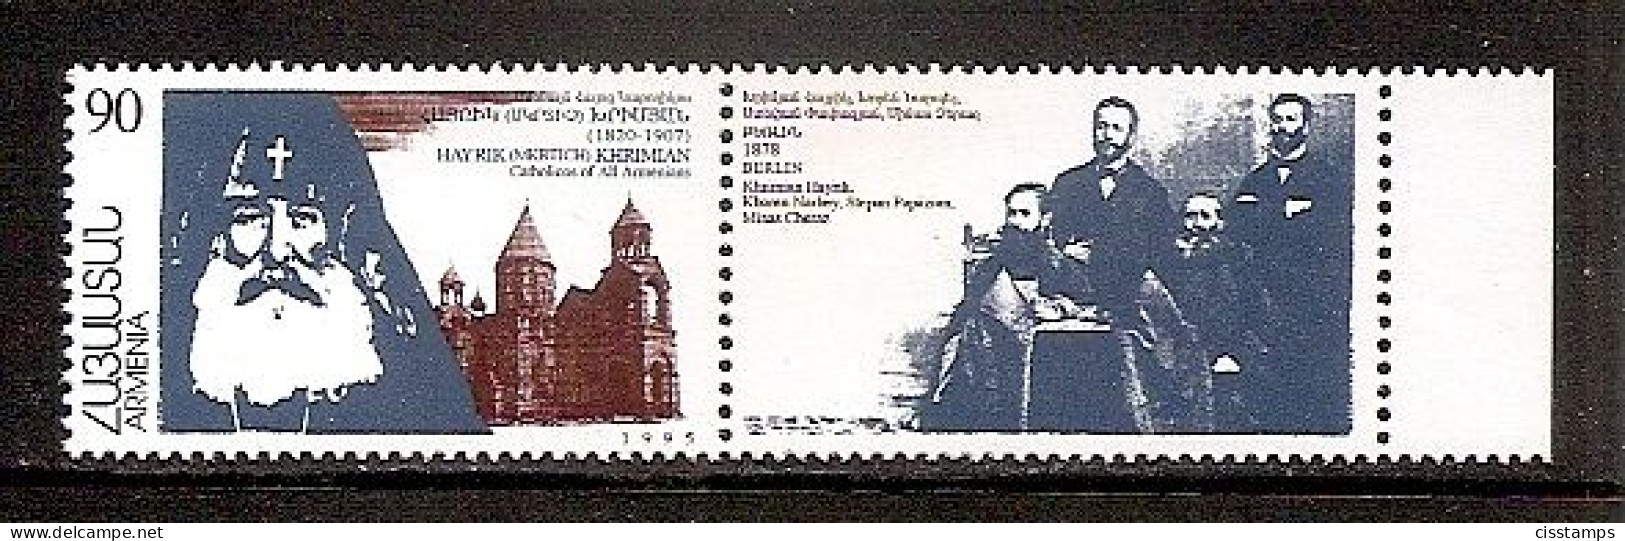 ARMENIA 1996●Patriarch Of Armenian Ortodox Church H. Khrimian●Mi281 MNH - Arménie